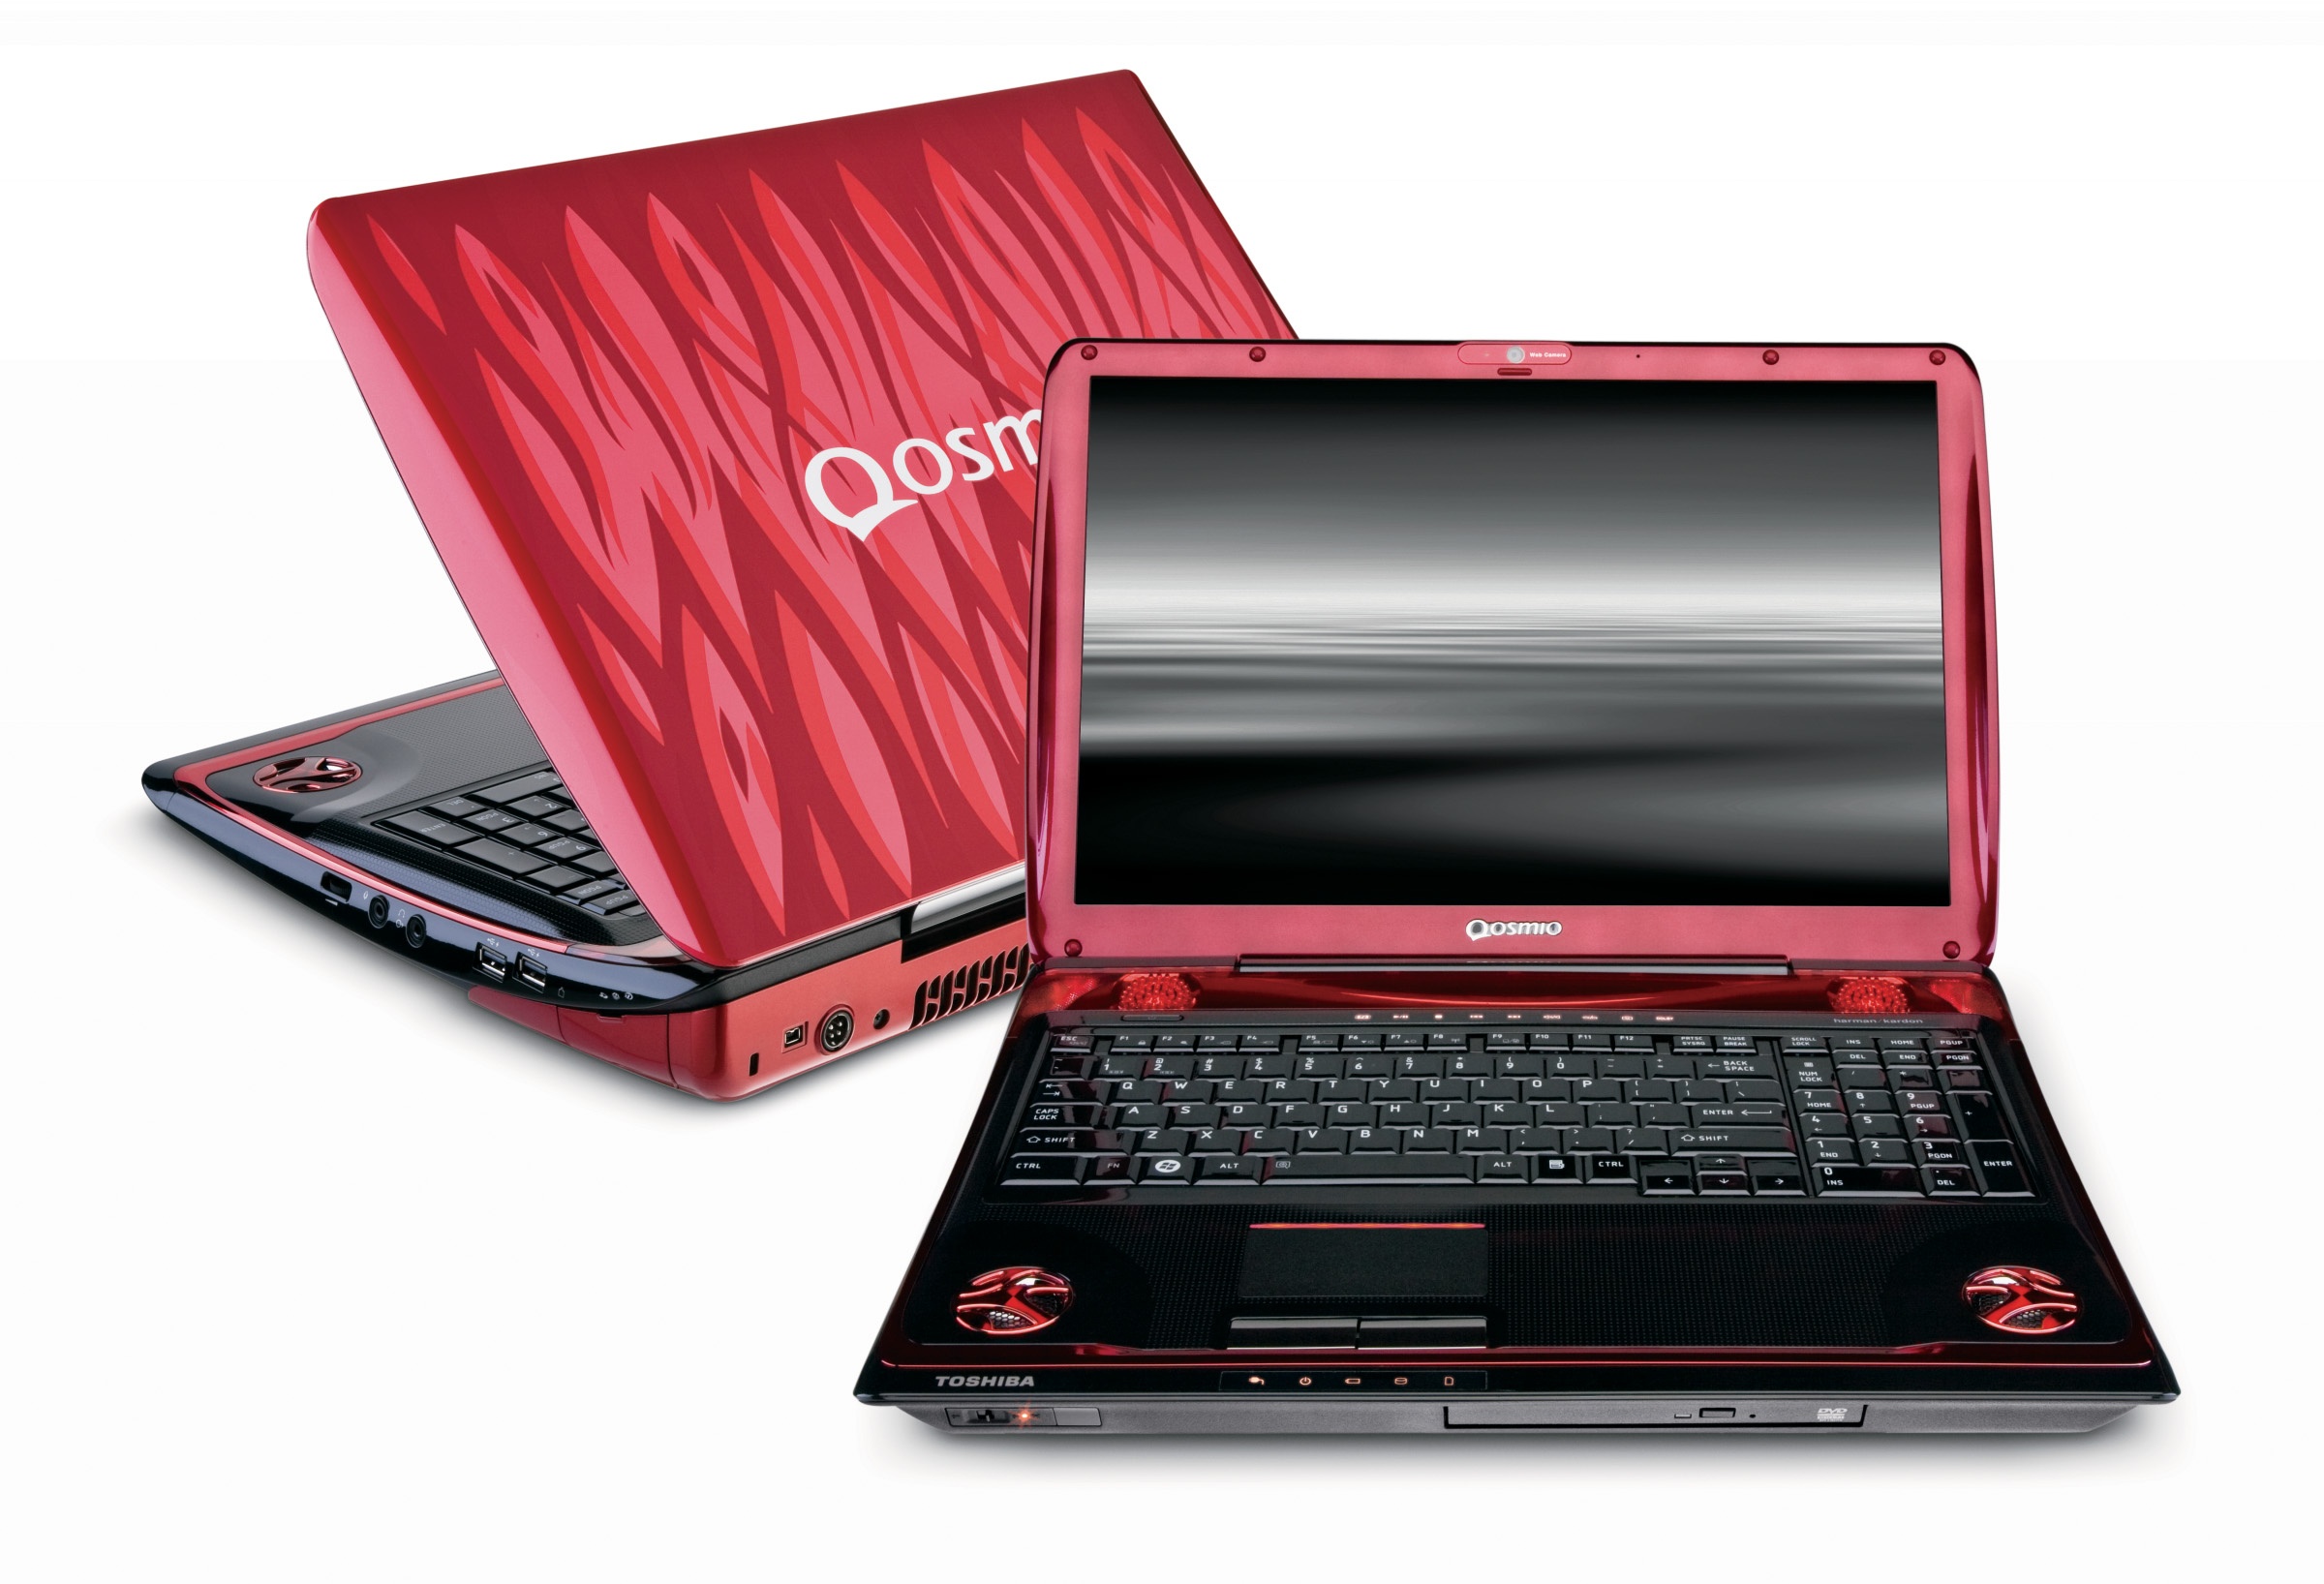 Недорогие ноутбуки екатеринбург. Ноутбук Toshiba Qosmio x305-q725. Игровой ноутбук Toshiba Qosmio. Toshiba Qosmio x9000er. Тошиба ноутбук Qosmio g340.